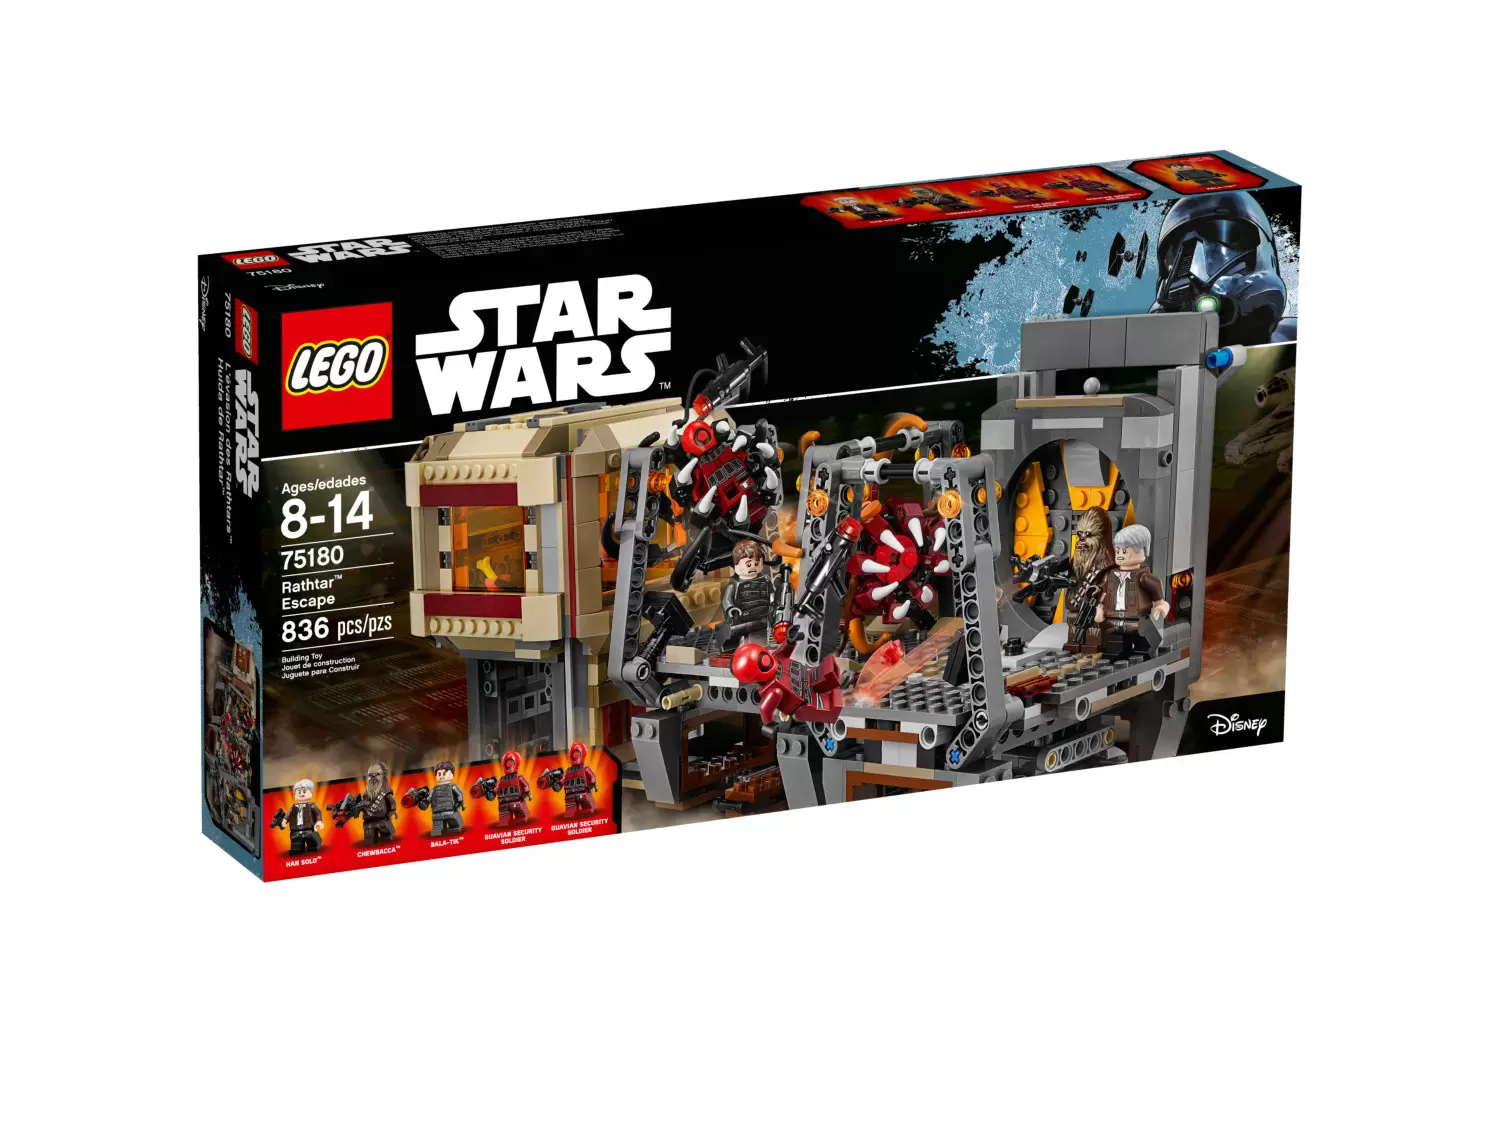 LEGO Star Wars - Rathtar Escape